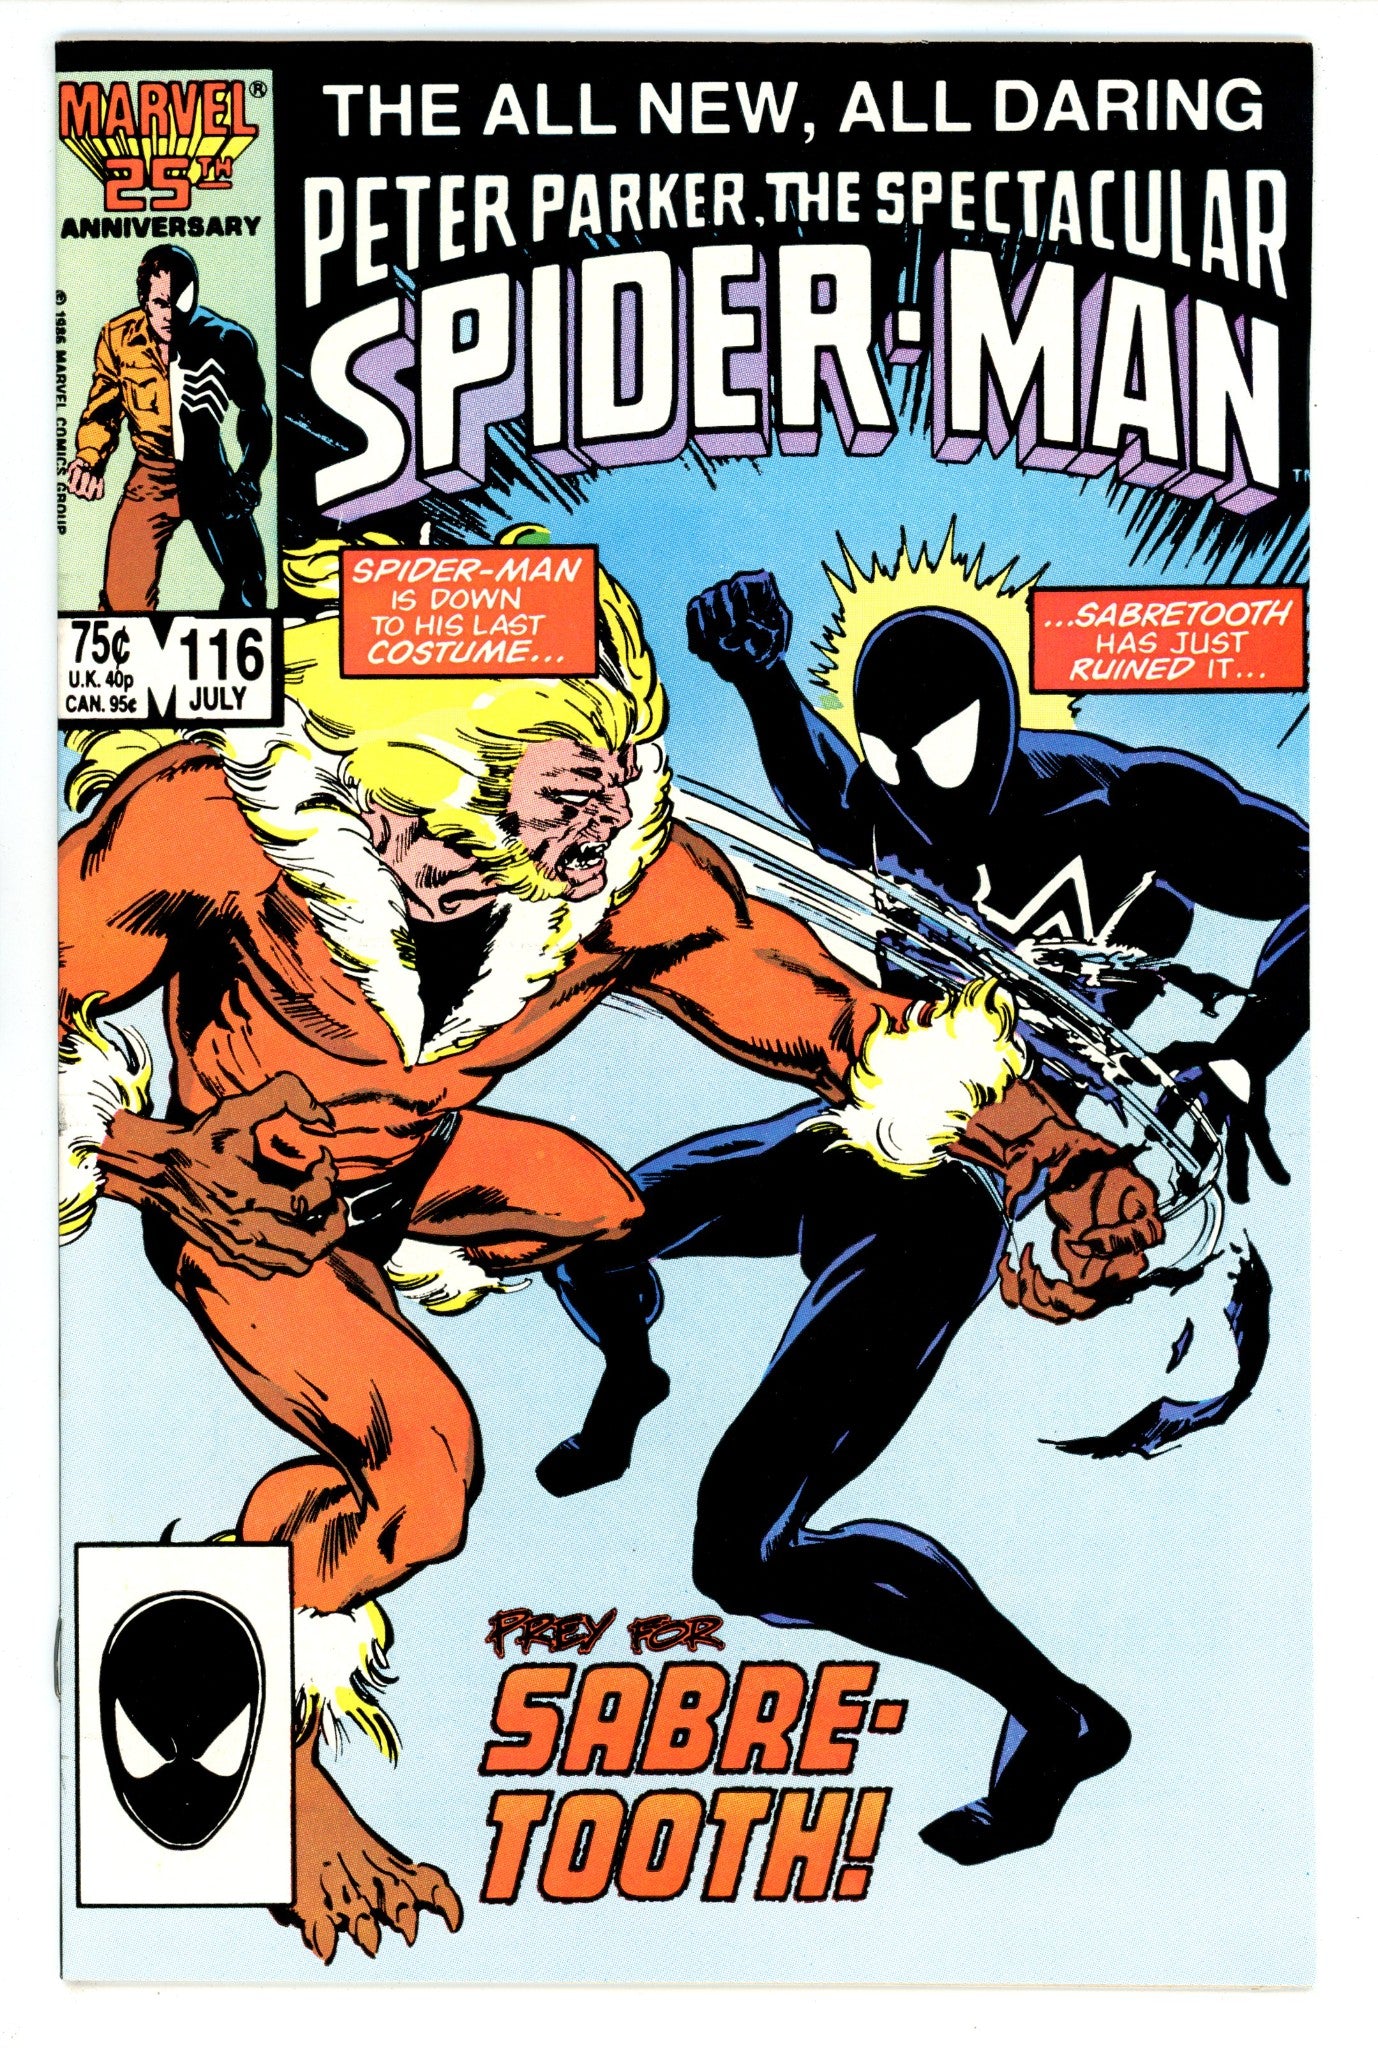 The Spectacular Spider-Man Vol 1 116 NM- (9.2) (1986) 